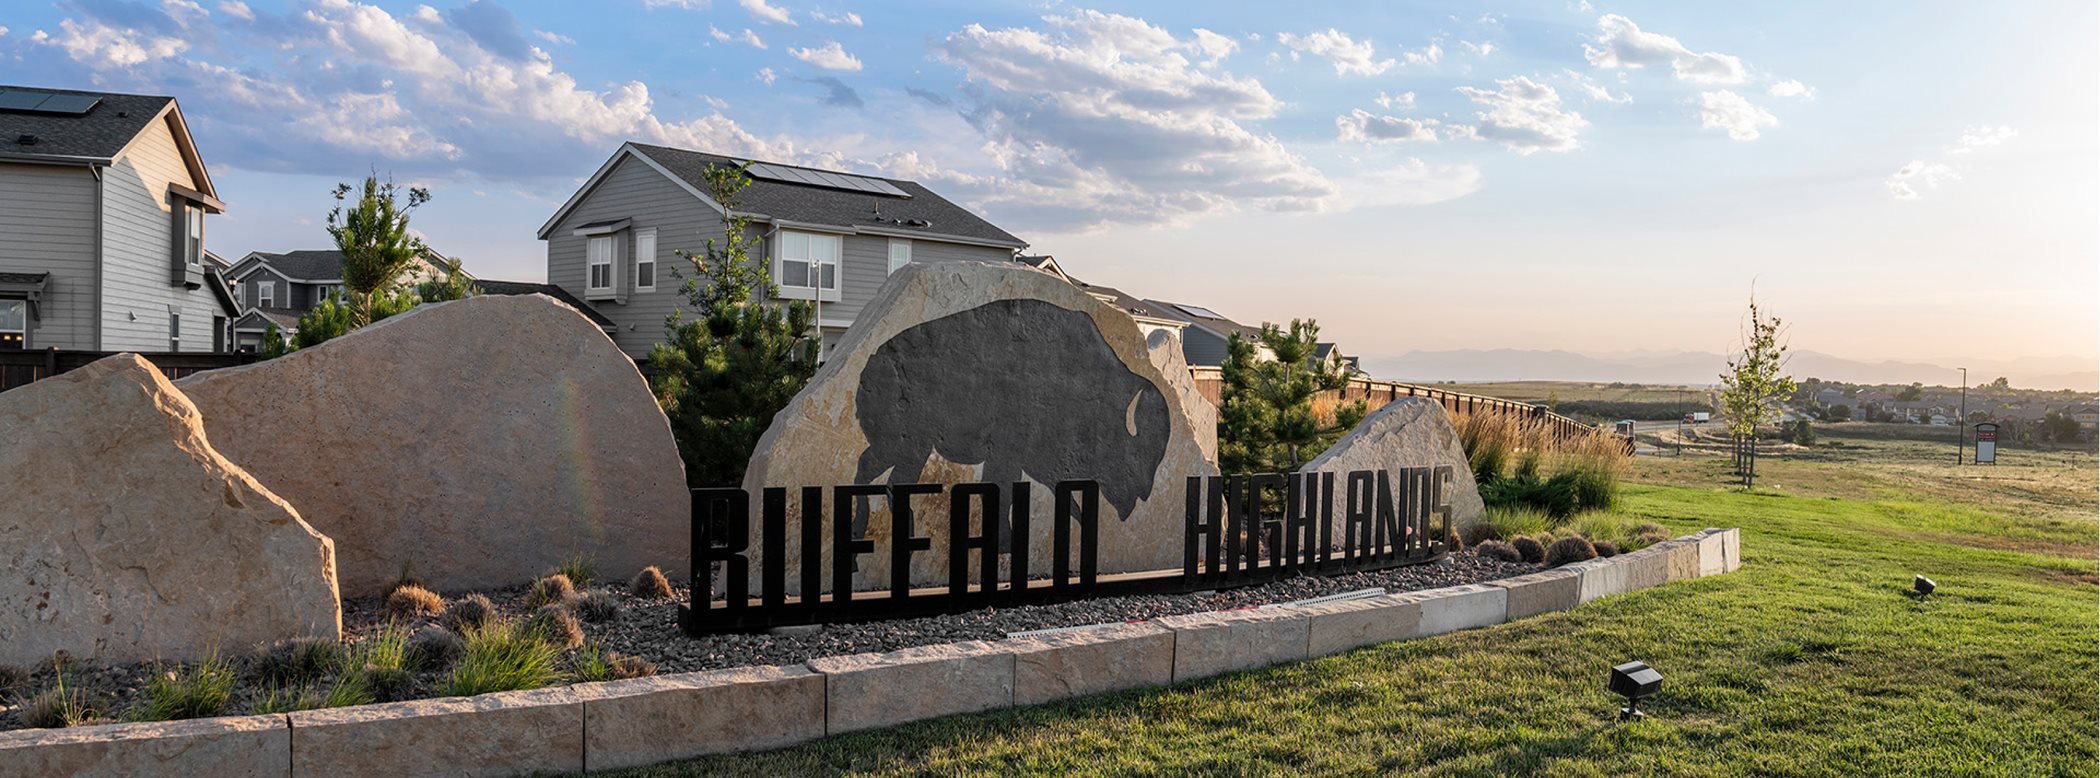 Buffalo Highlands Monument Sign